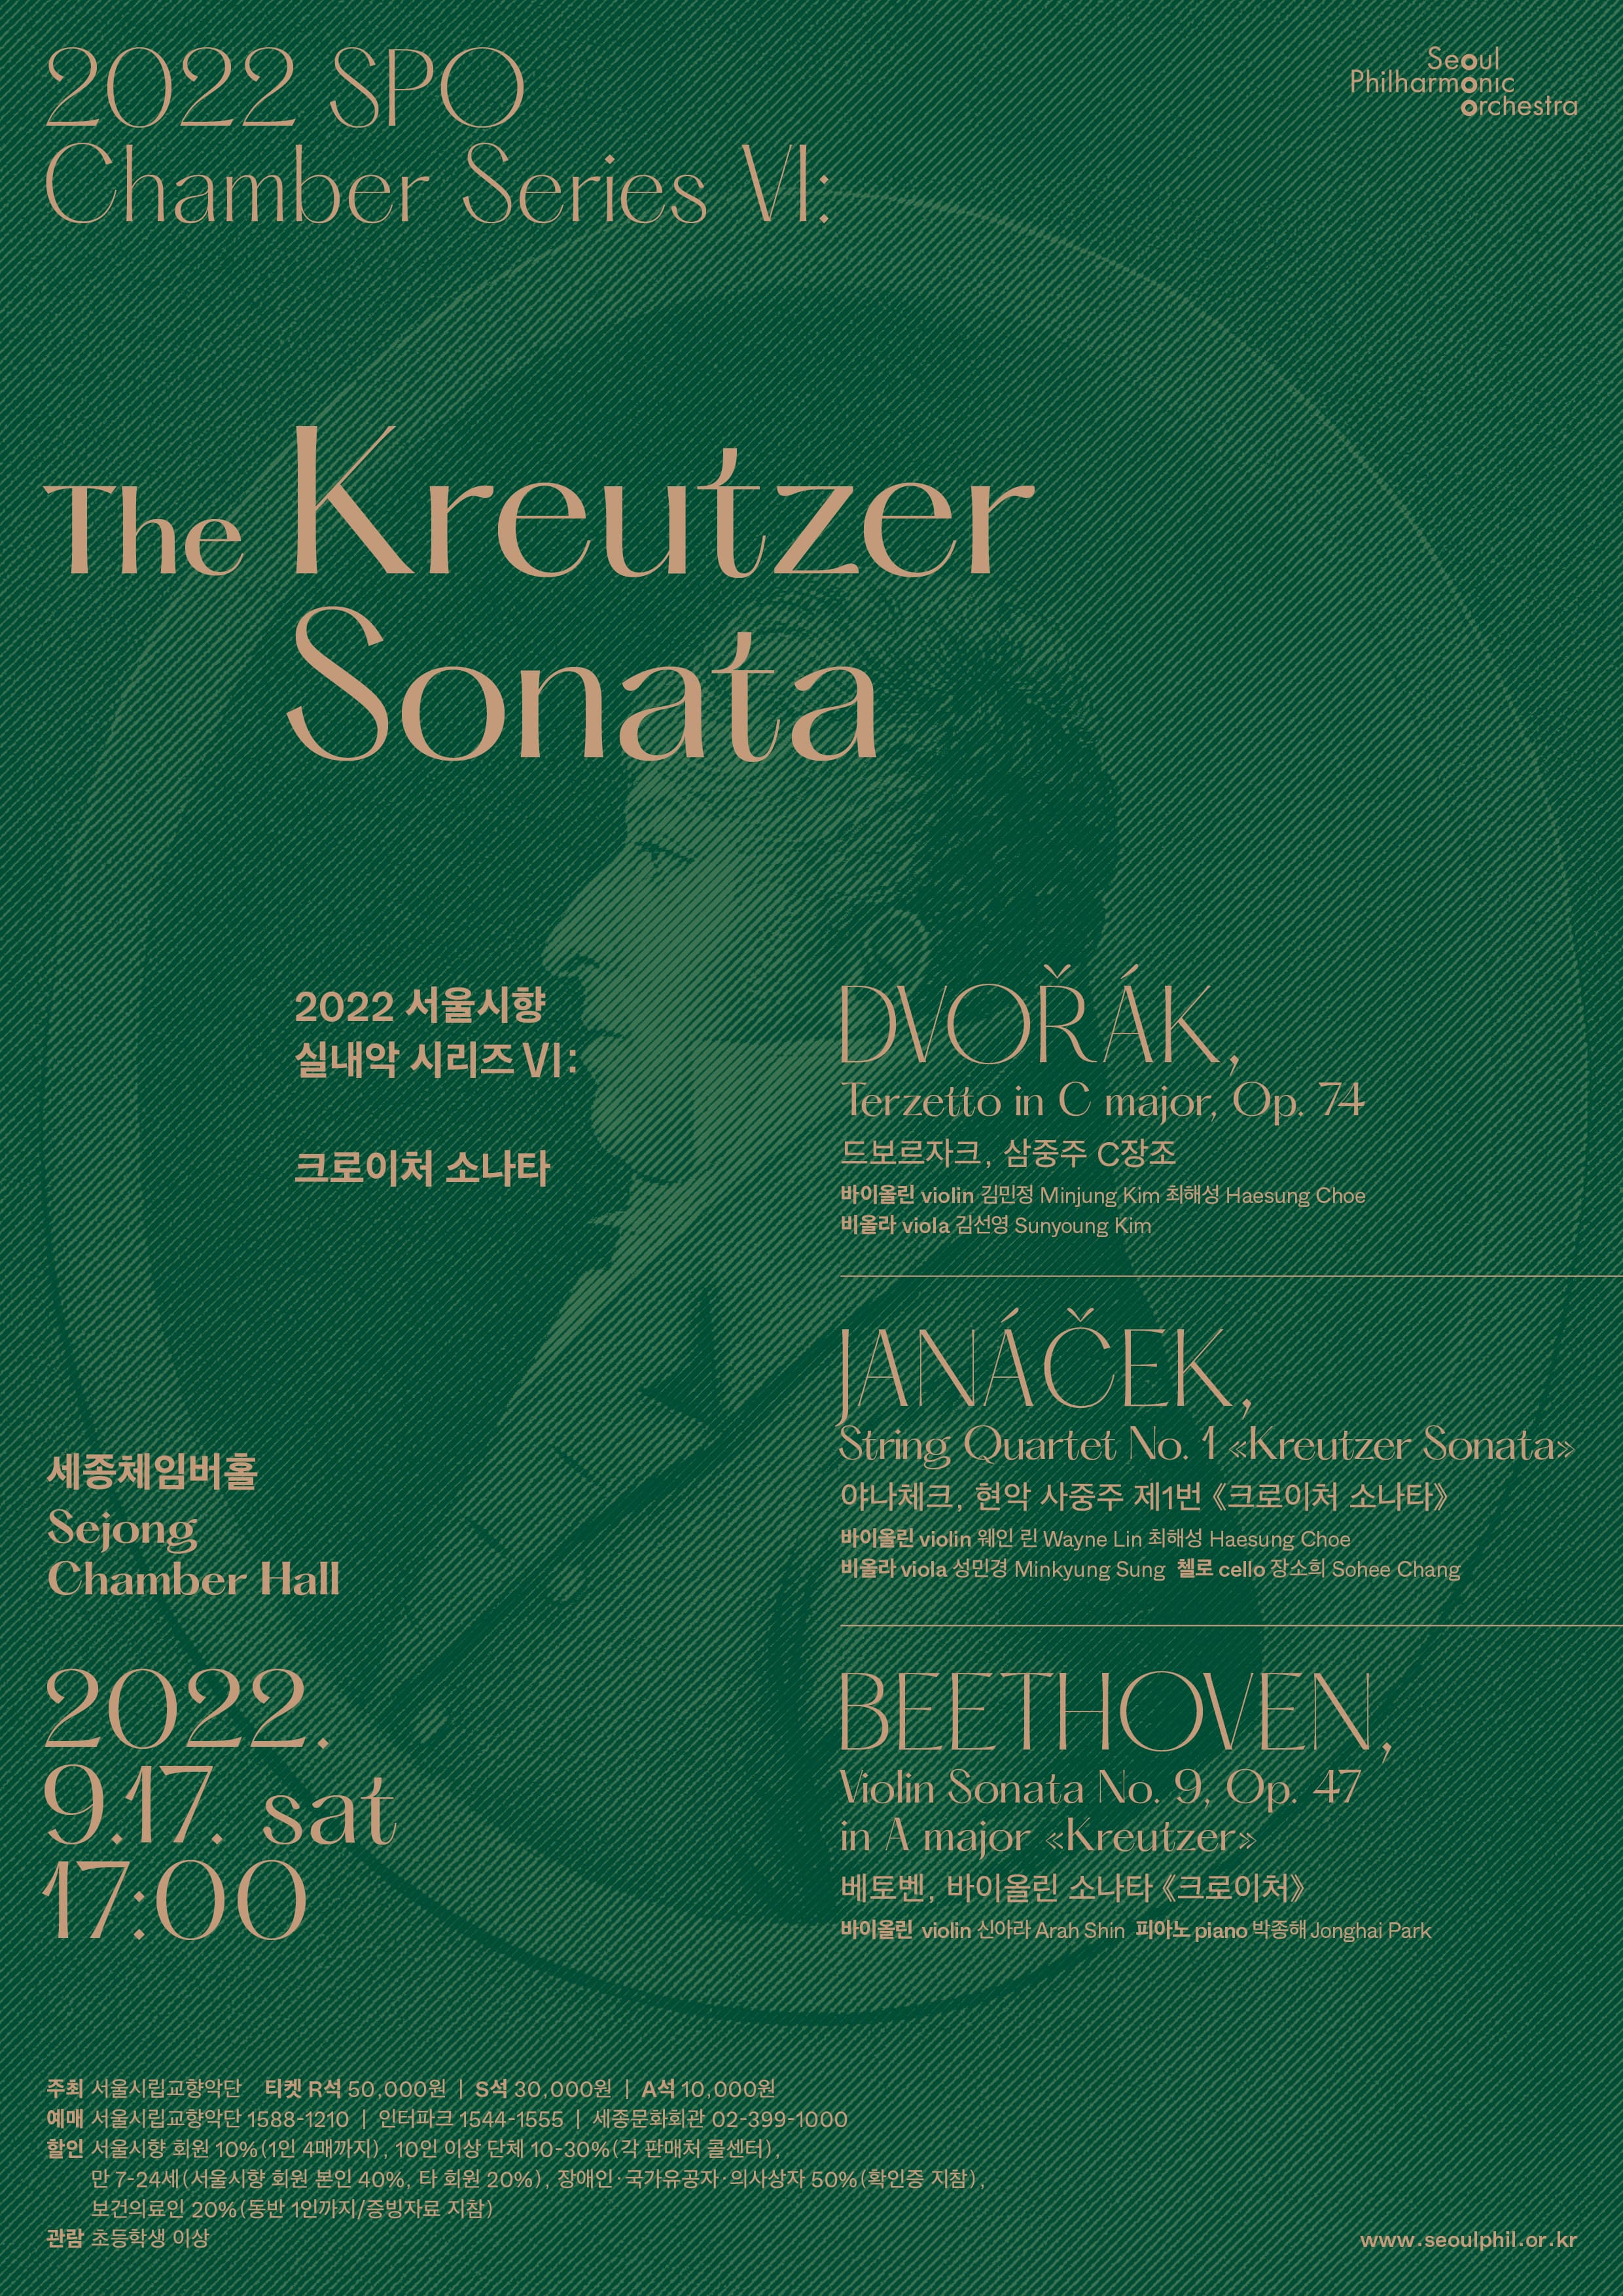 2022 SPO Chamber Series VI: Kreutzer Sonata | 실내악 시리즈 VI: 크로이처 소나타 | 2022.9.17 토요일 오후 5시 | 세종문화회관 체임버홀